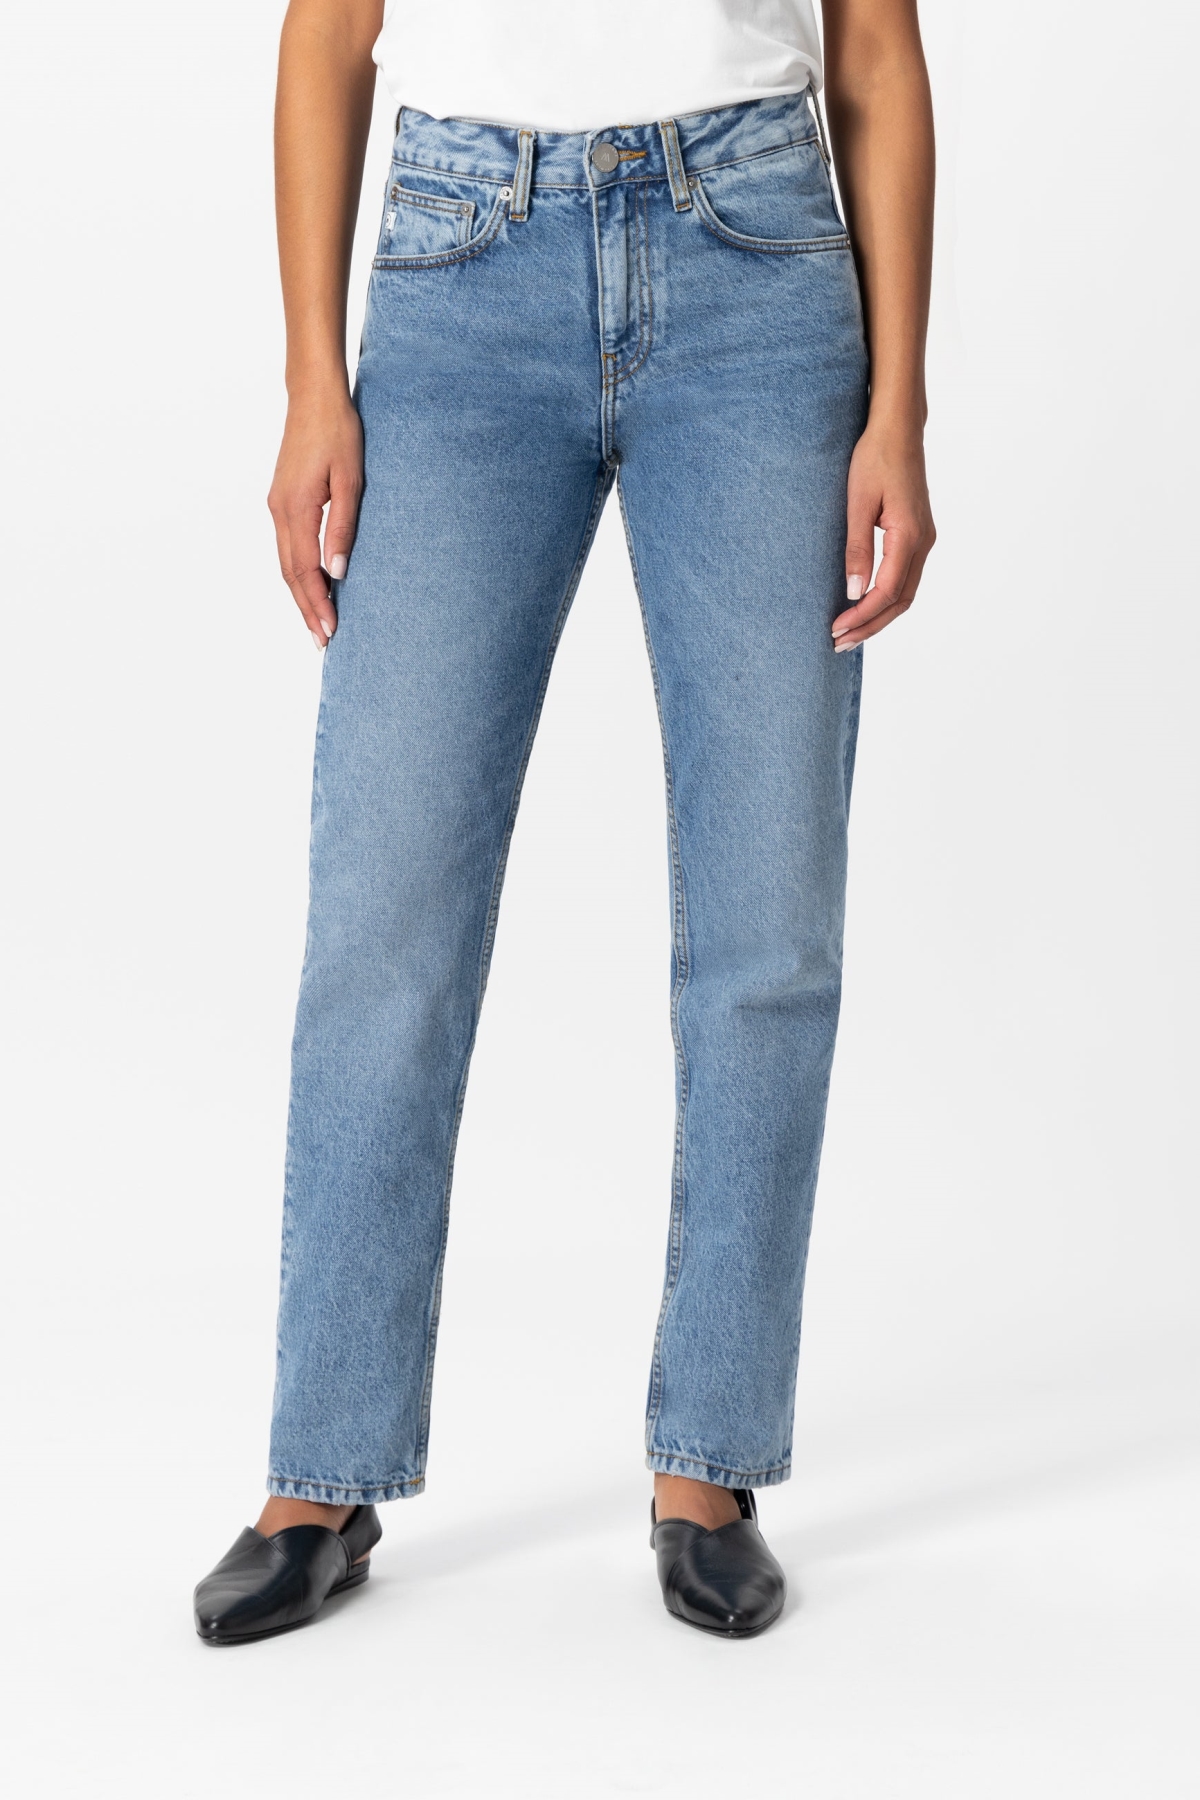 MUD Jeans dames vegan Spijkerbroek Easy Go Stone Vintage Blauw product